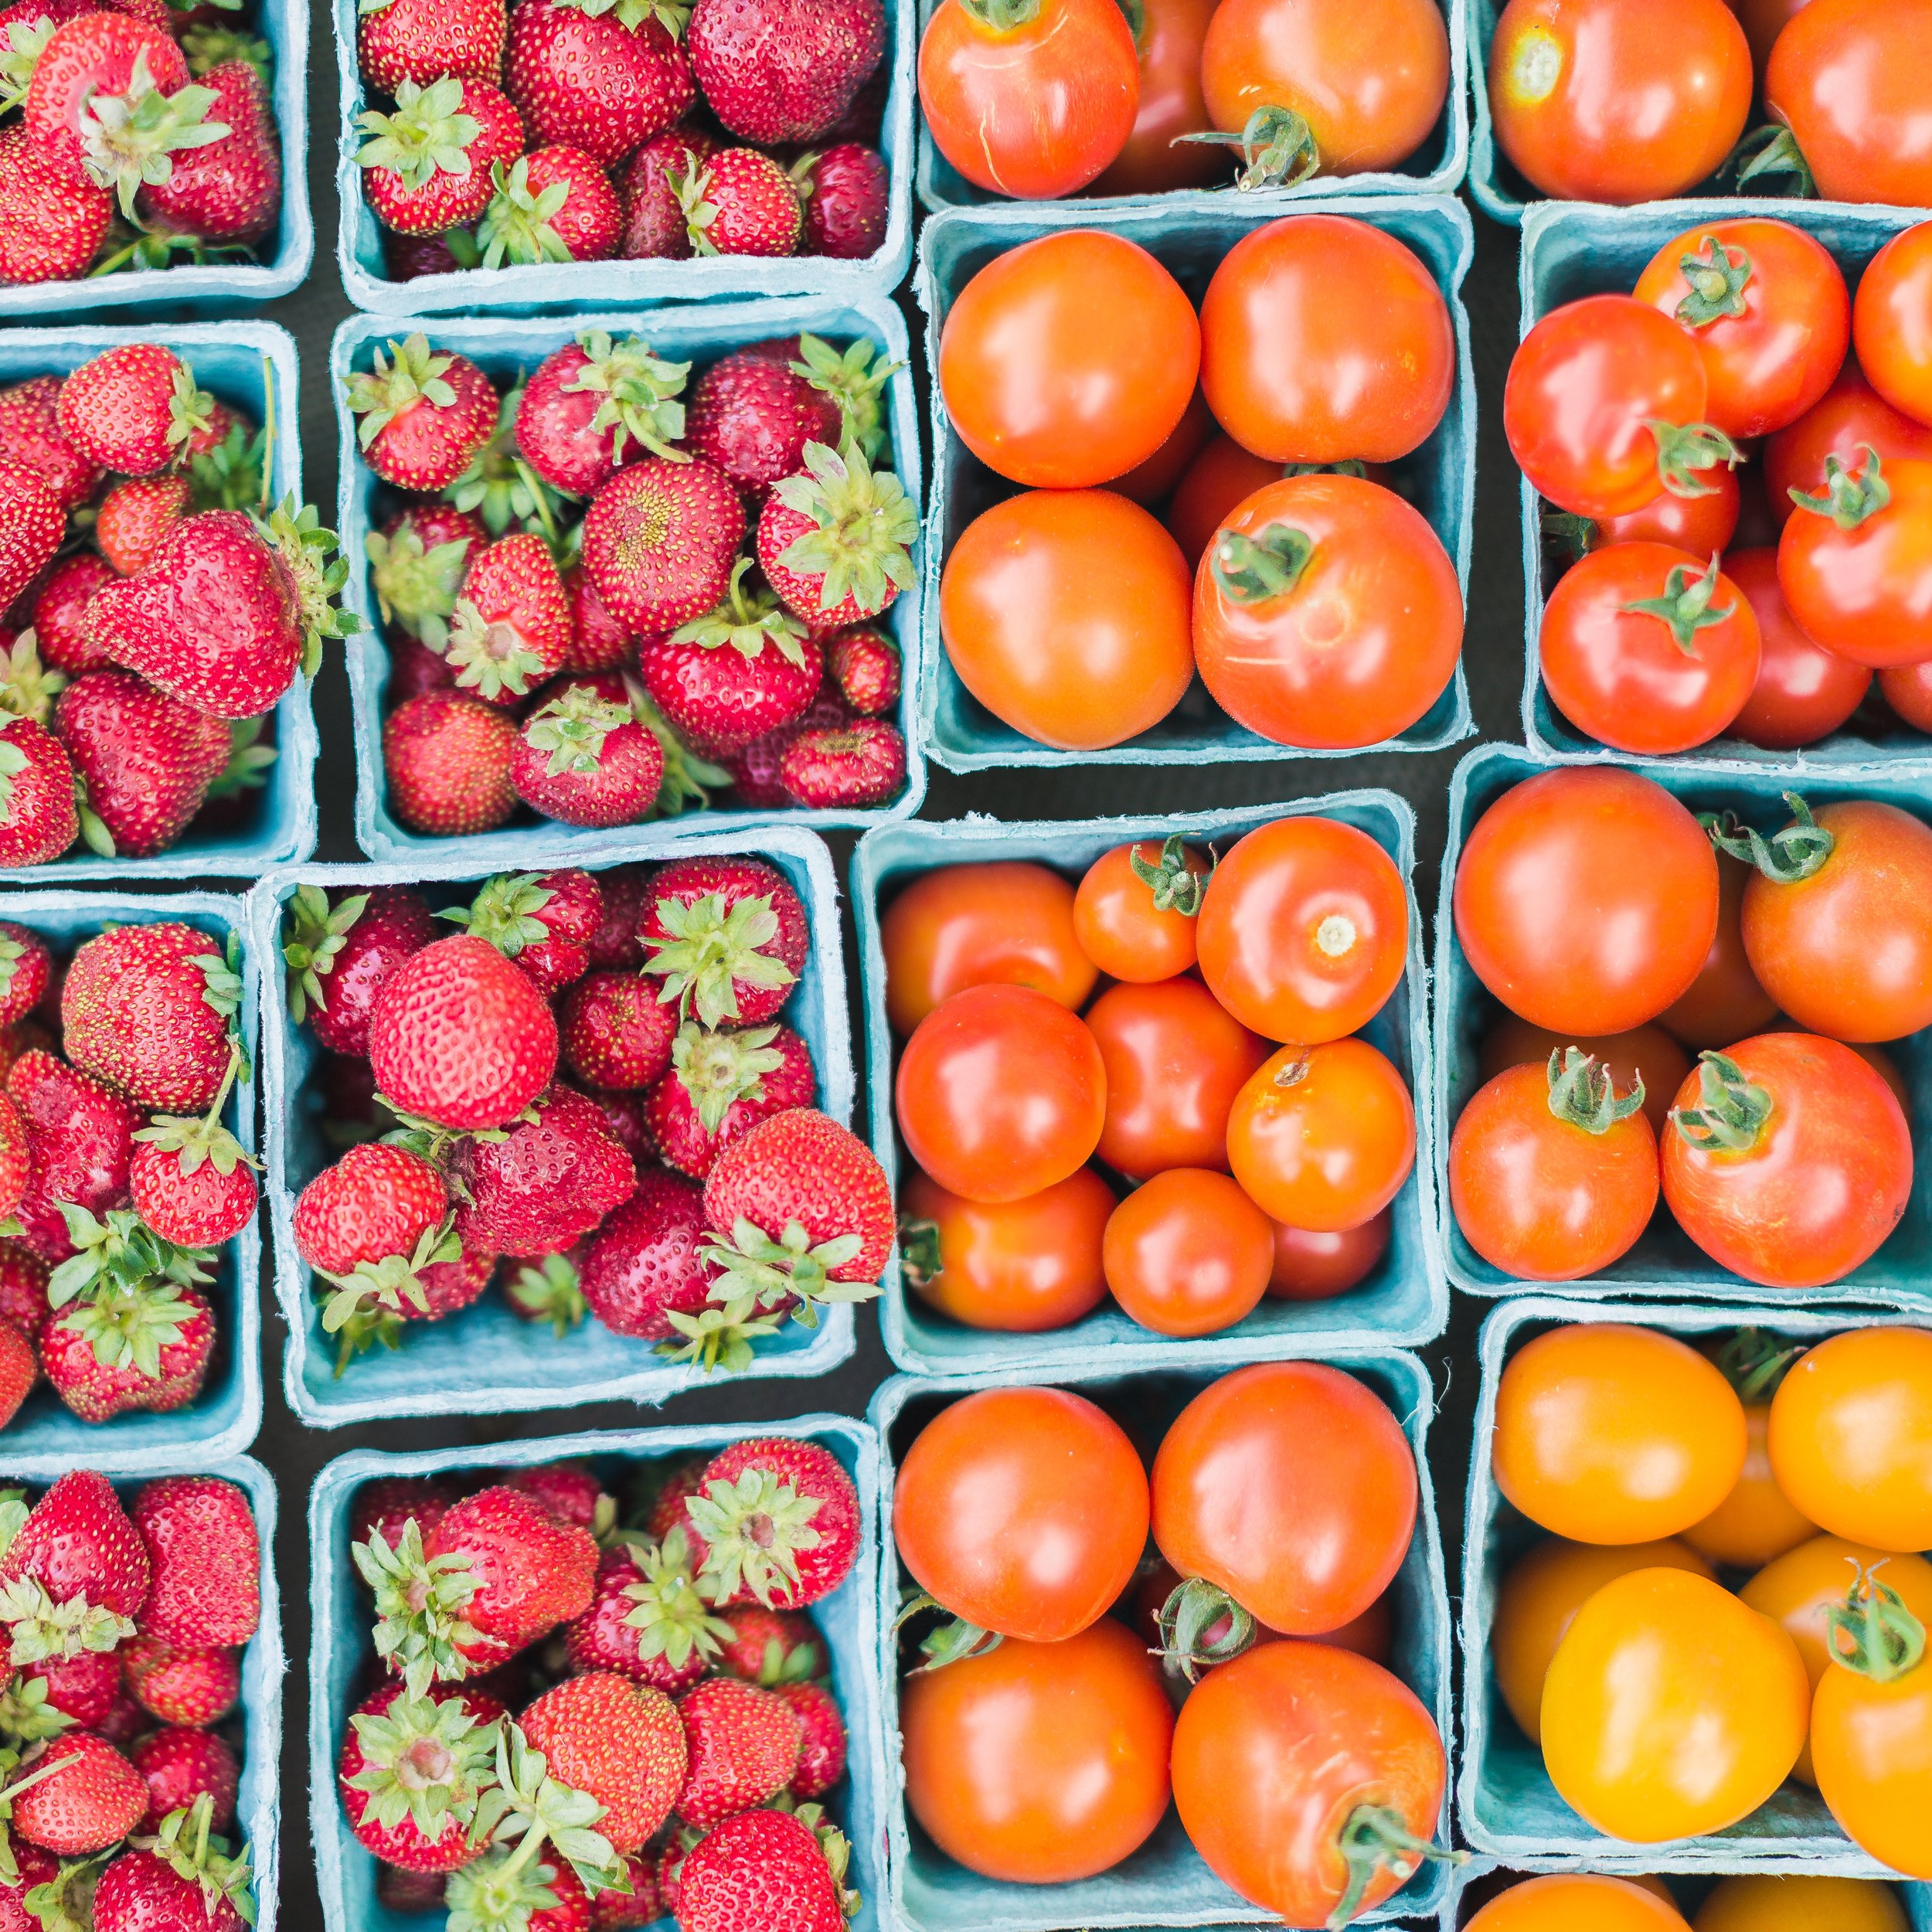 Strawberries & Tomatoes.jpg